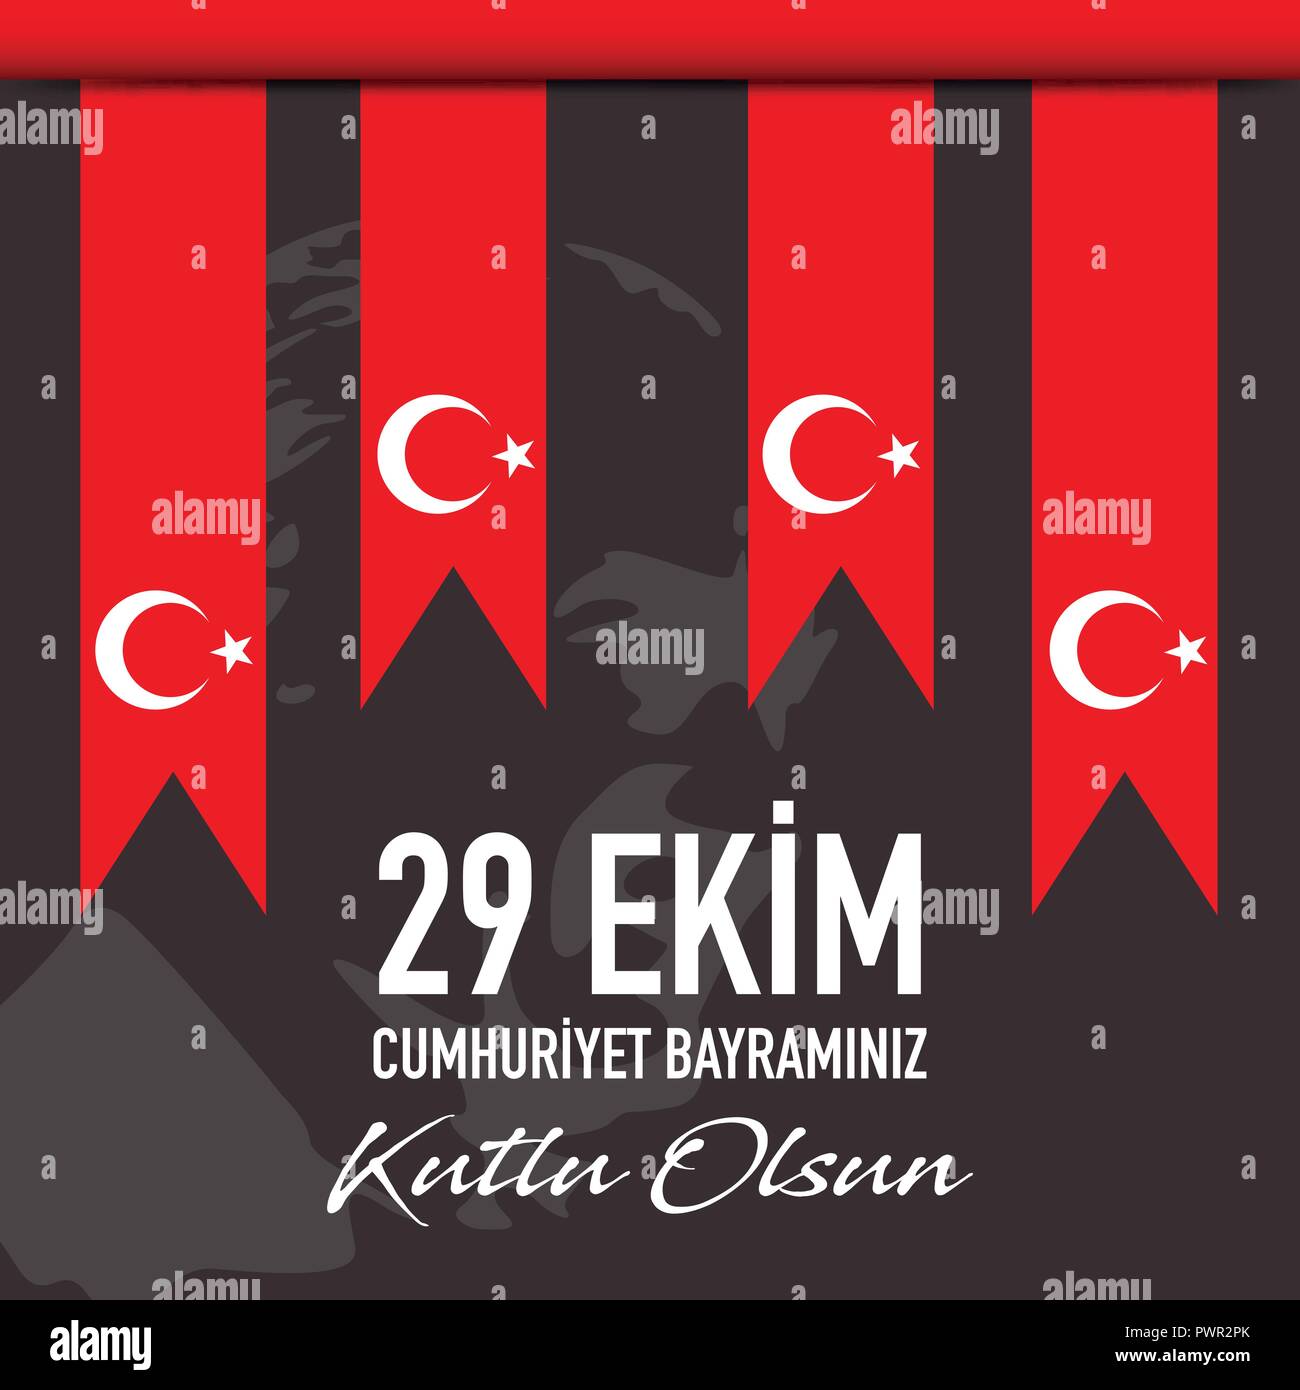 29 Ekim Cumhuriyet Bayrami - October 29 Republic Day in Turkey, vector, illustration, eps file Stock Vector